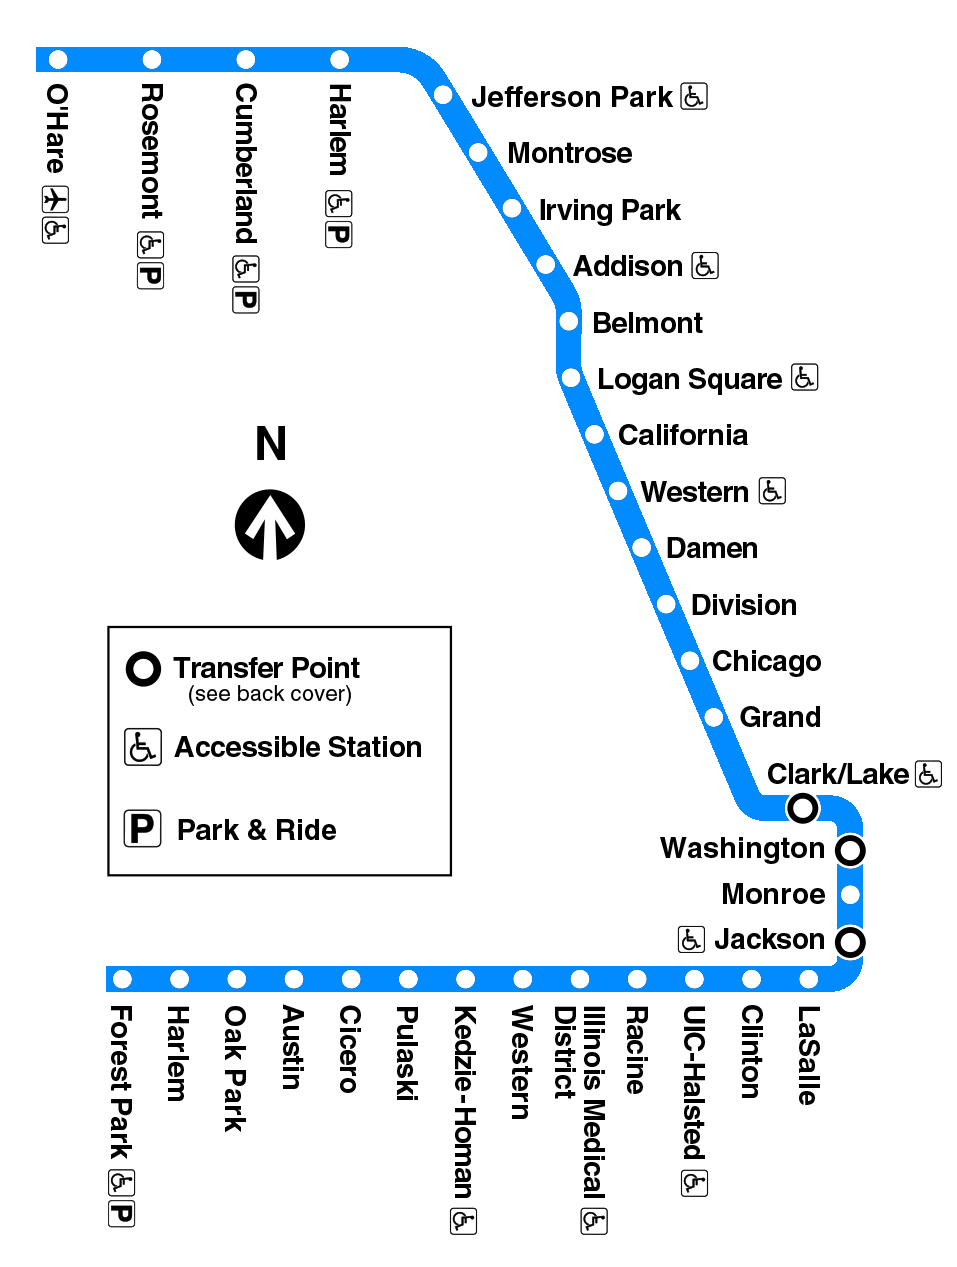 Chicago Metro Blue Line Stops (O’Hare – Forest Park Line)